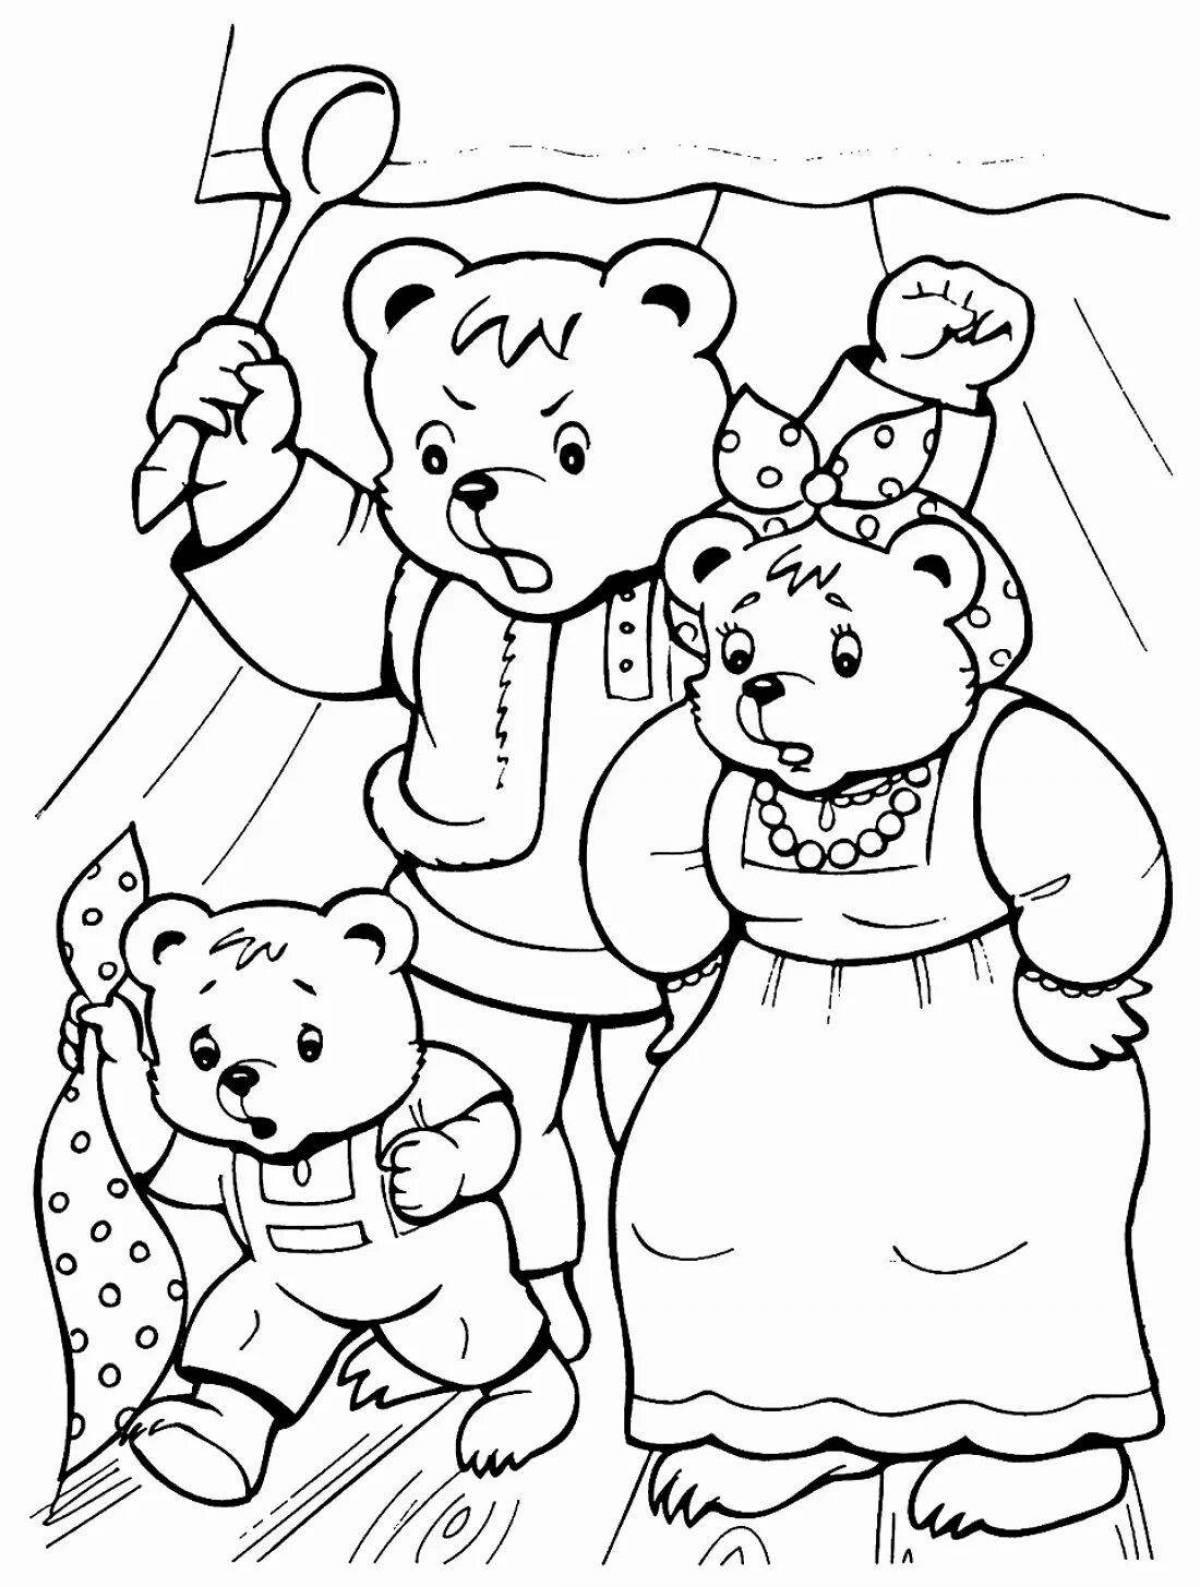 Милая раскраска «три медведя и маша»